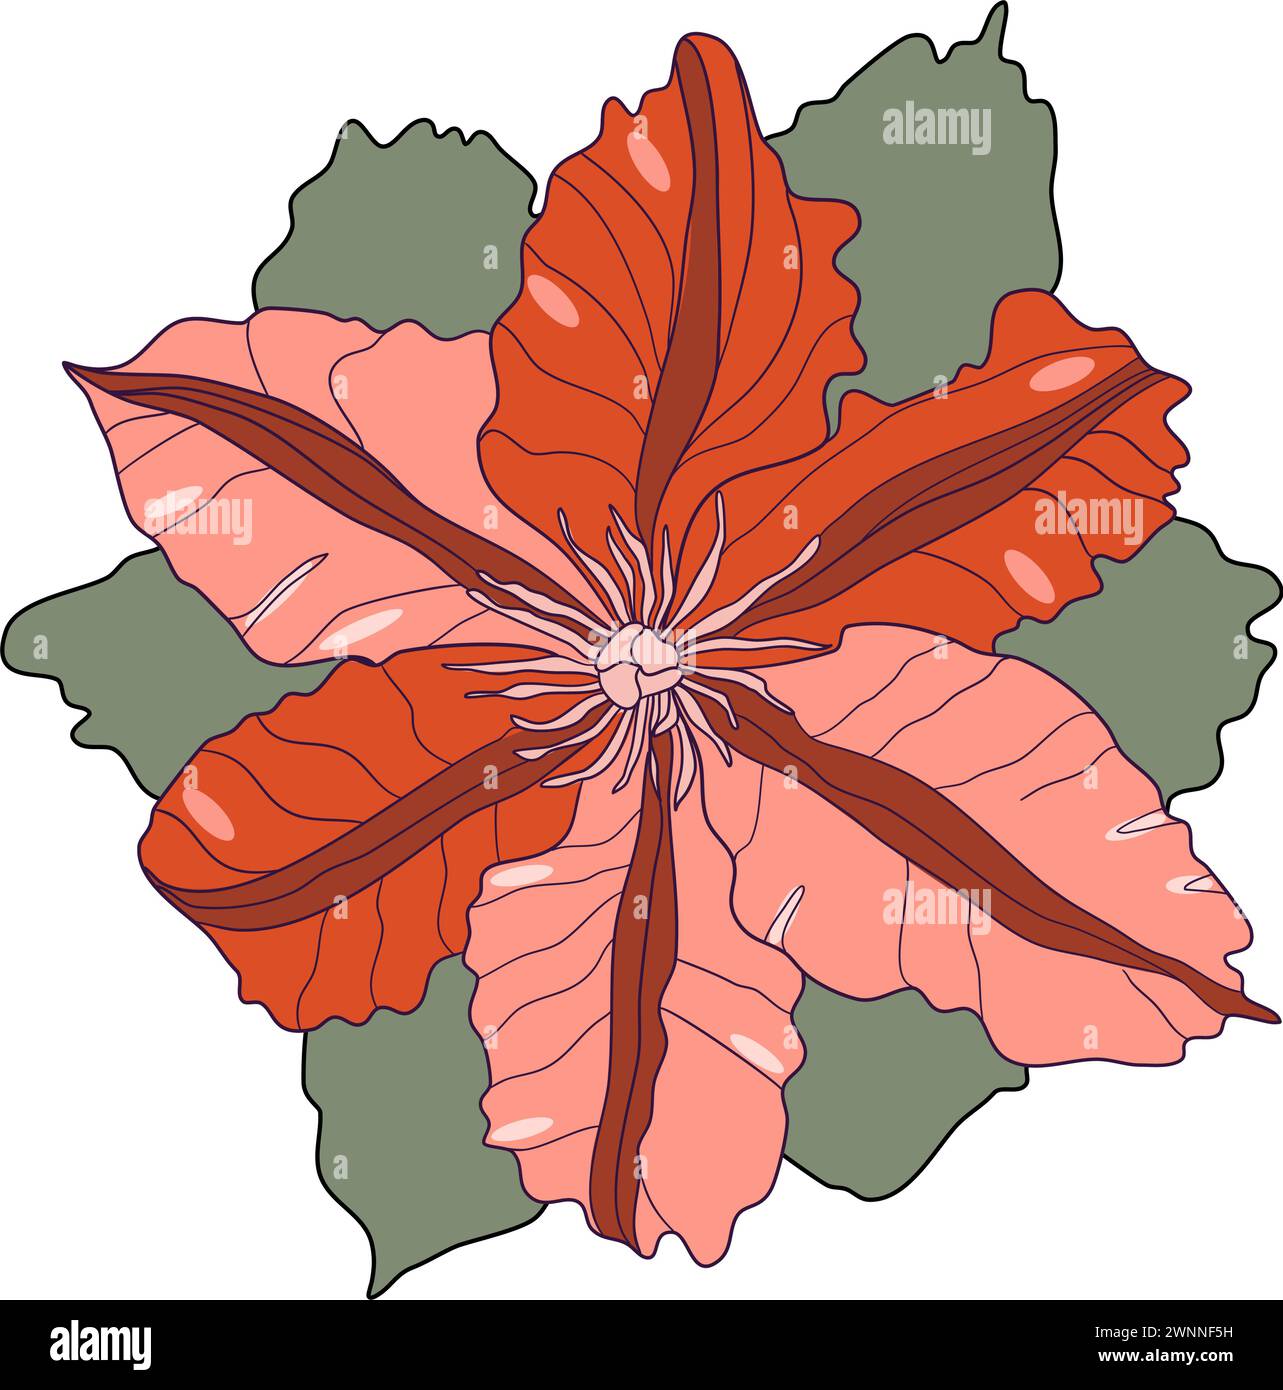 Clematis flower head vector illustration Stock Vector